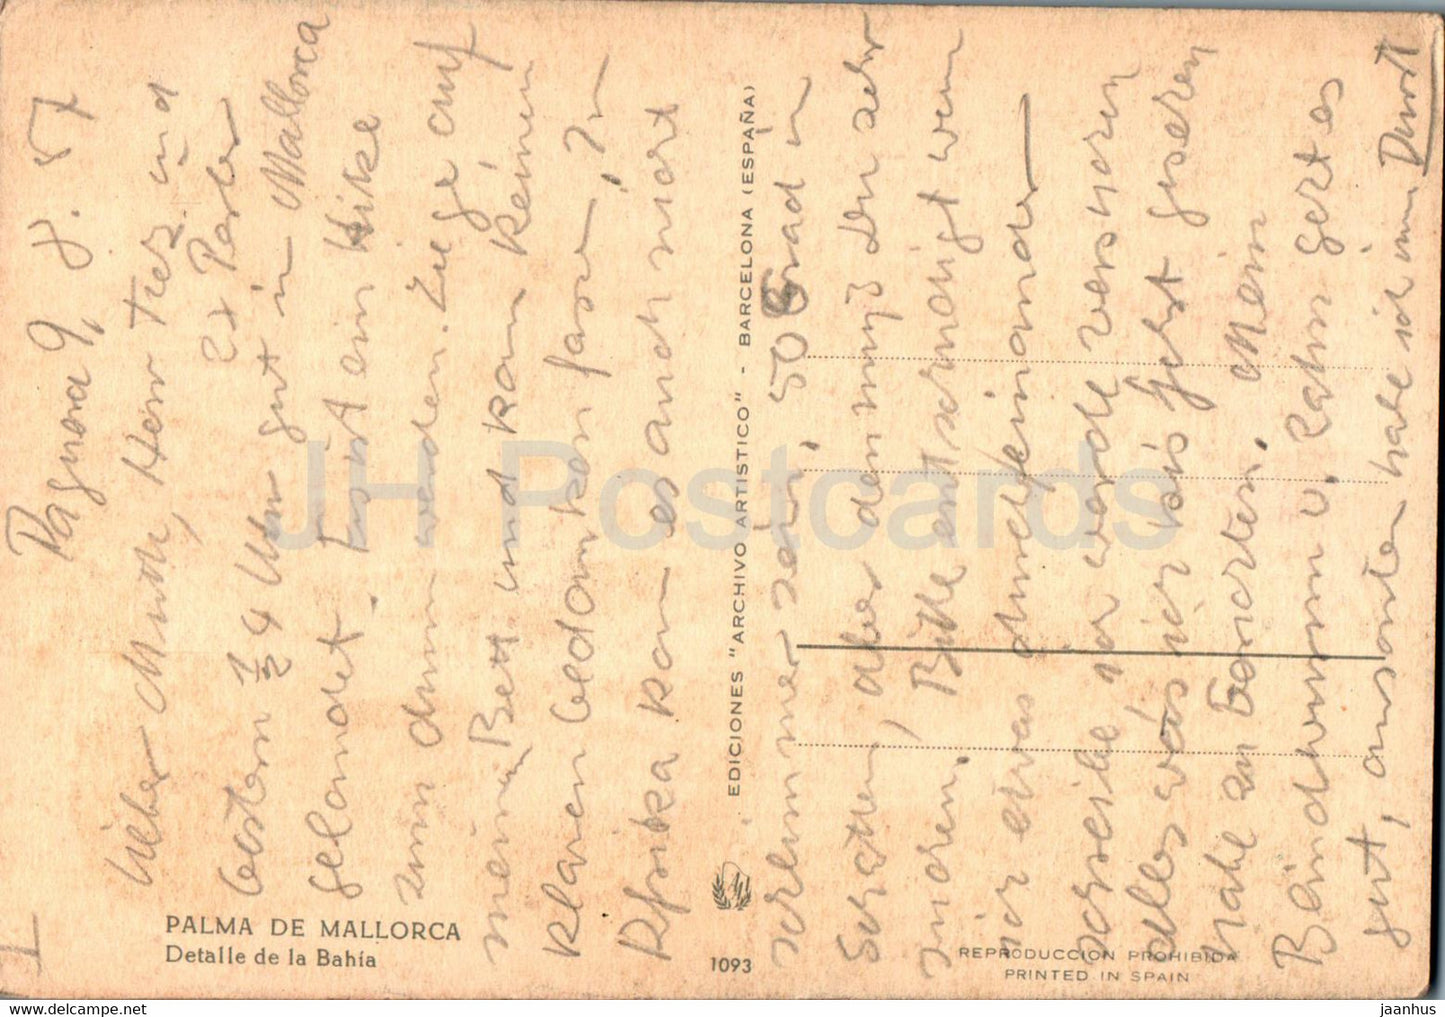 Palma de Mallorca - Detalle de la Bahia - Boot - alte Postkarte - 1093 - Spanien - unbenutzt